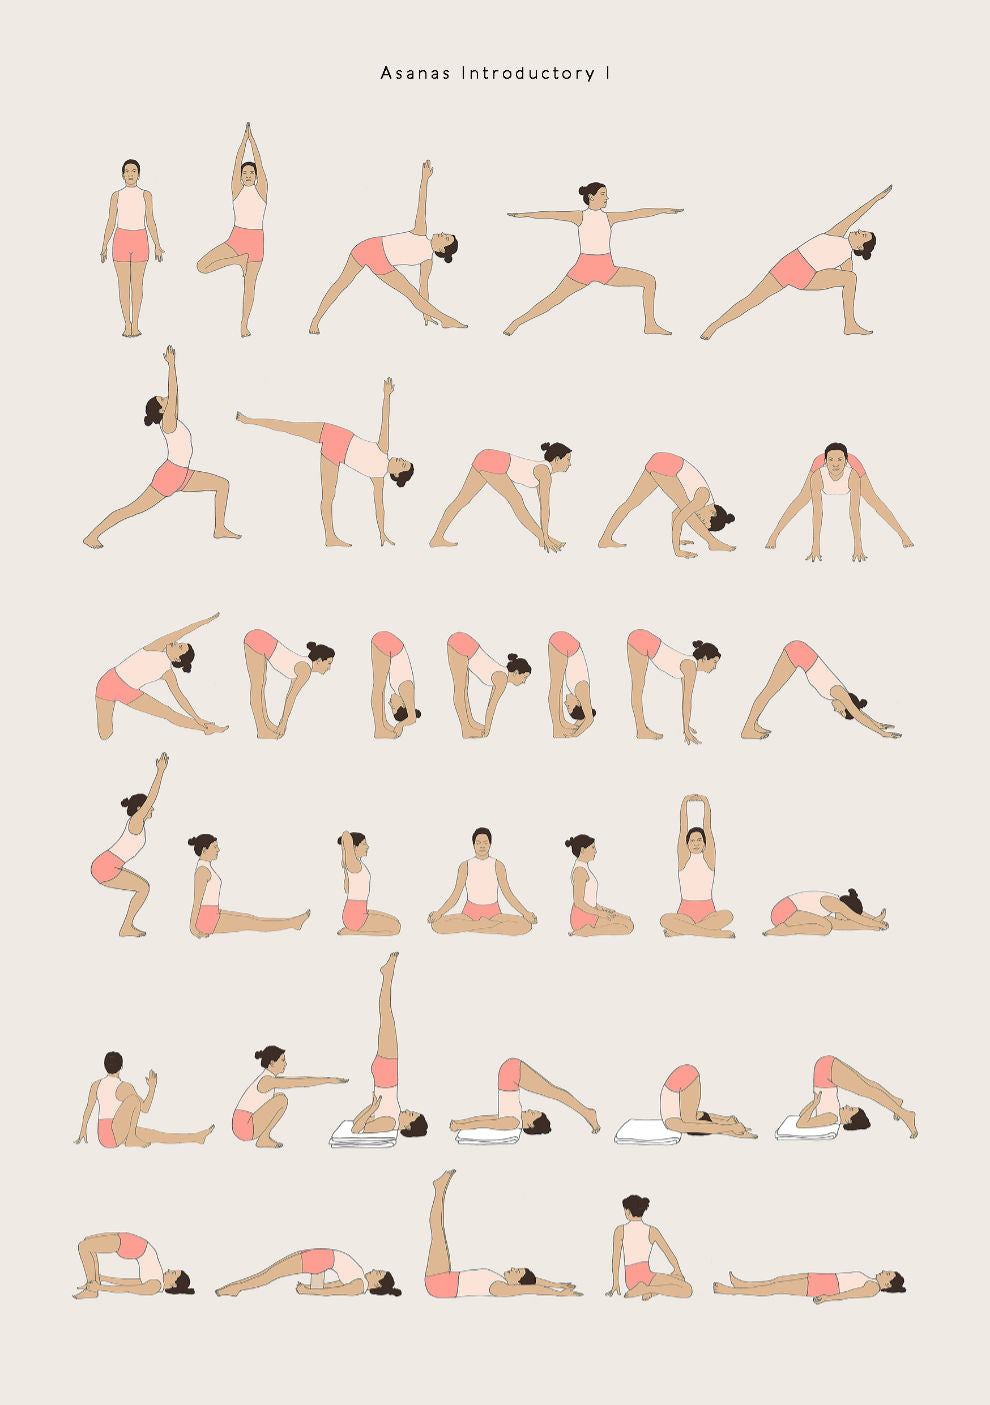 Svejar Yoga Art - Poster - Introductory 1